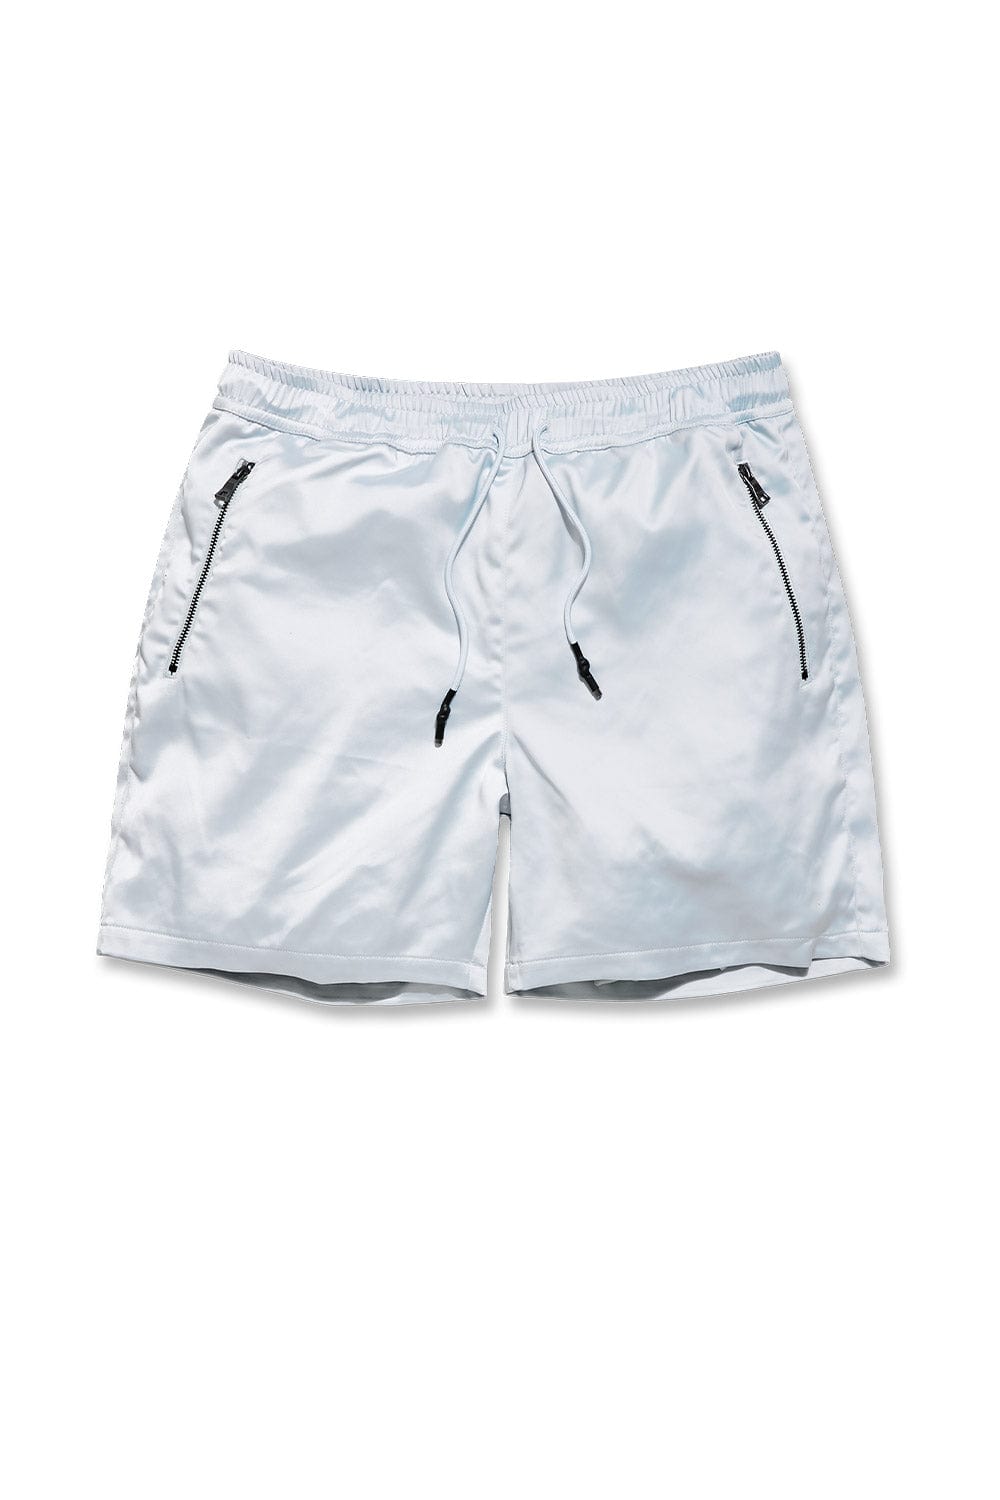 Jordan Craig Athletic - Lux Shorts Coastal Blue / S